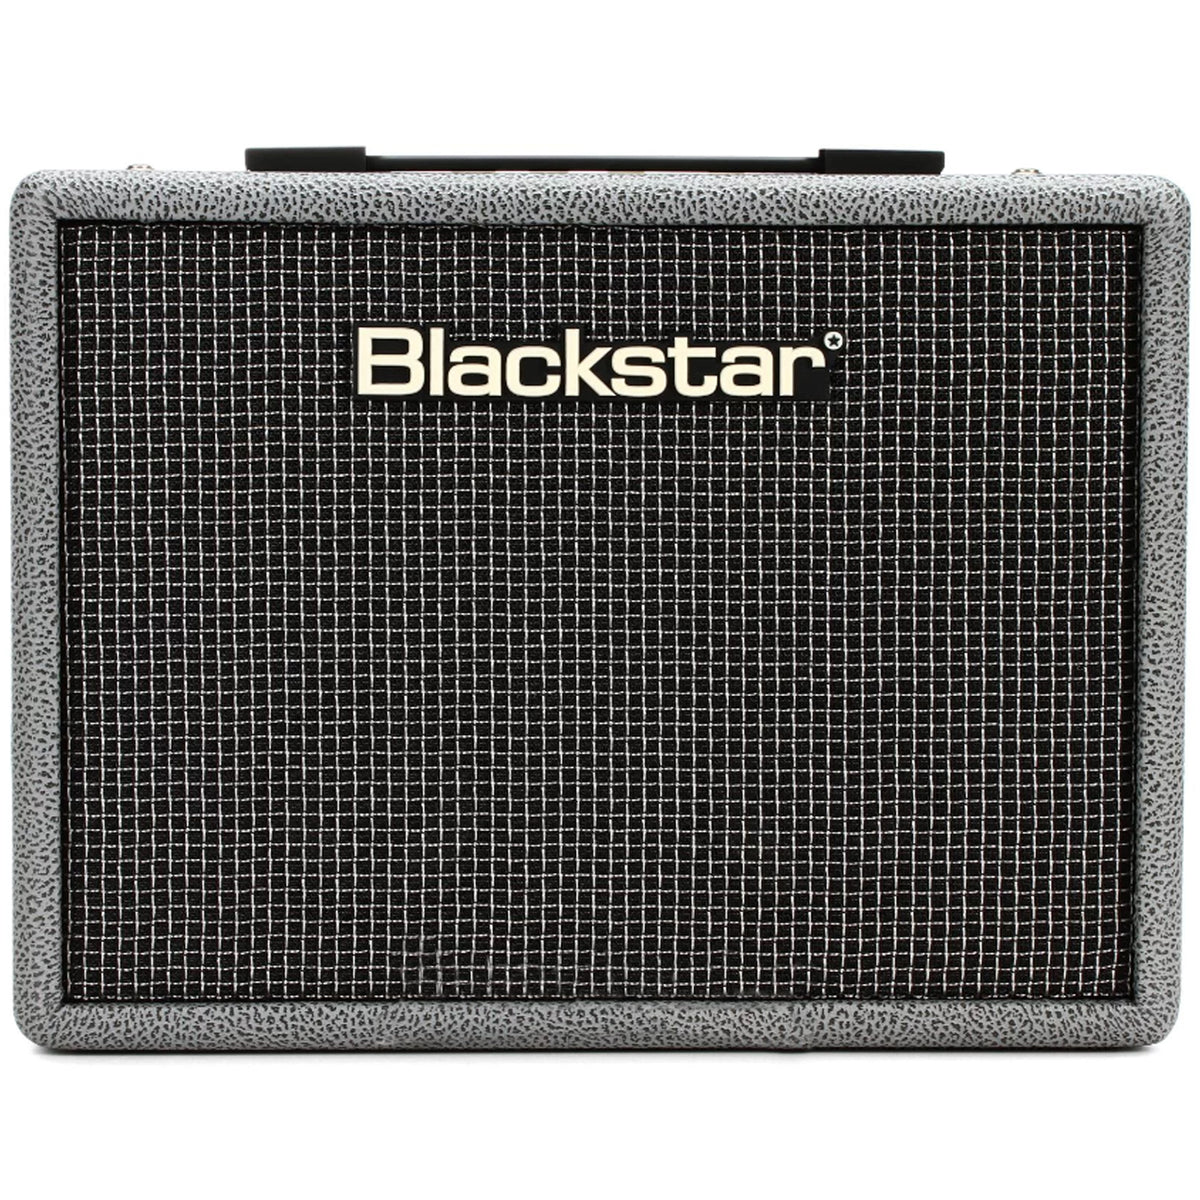 Want to purchase an Blackstar Debut 15E 15 Watt Combo Amplifier